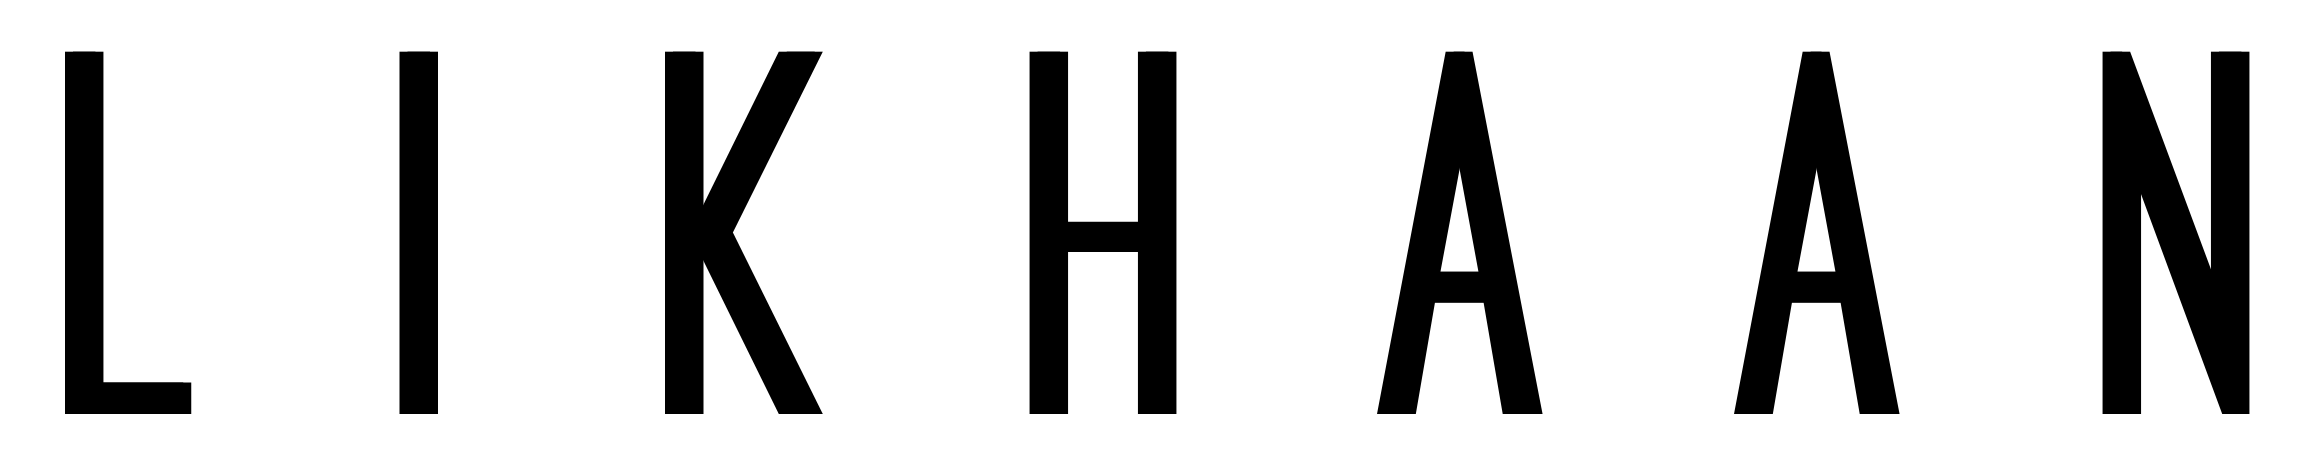 Likhaan Logo Wordmark